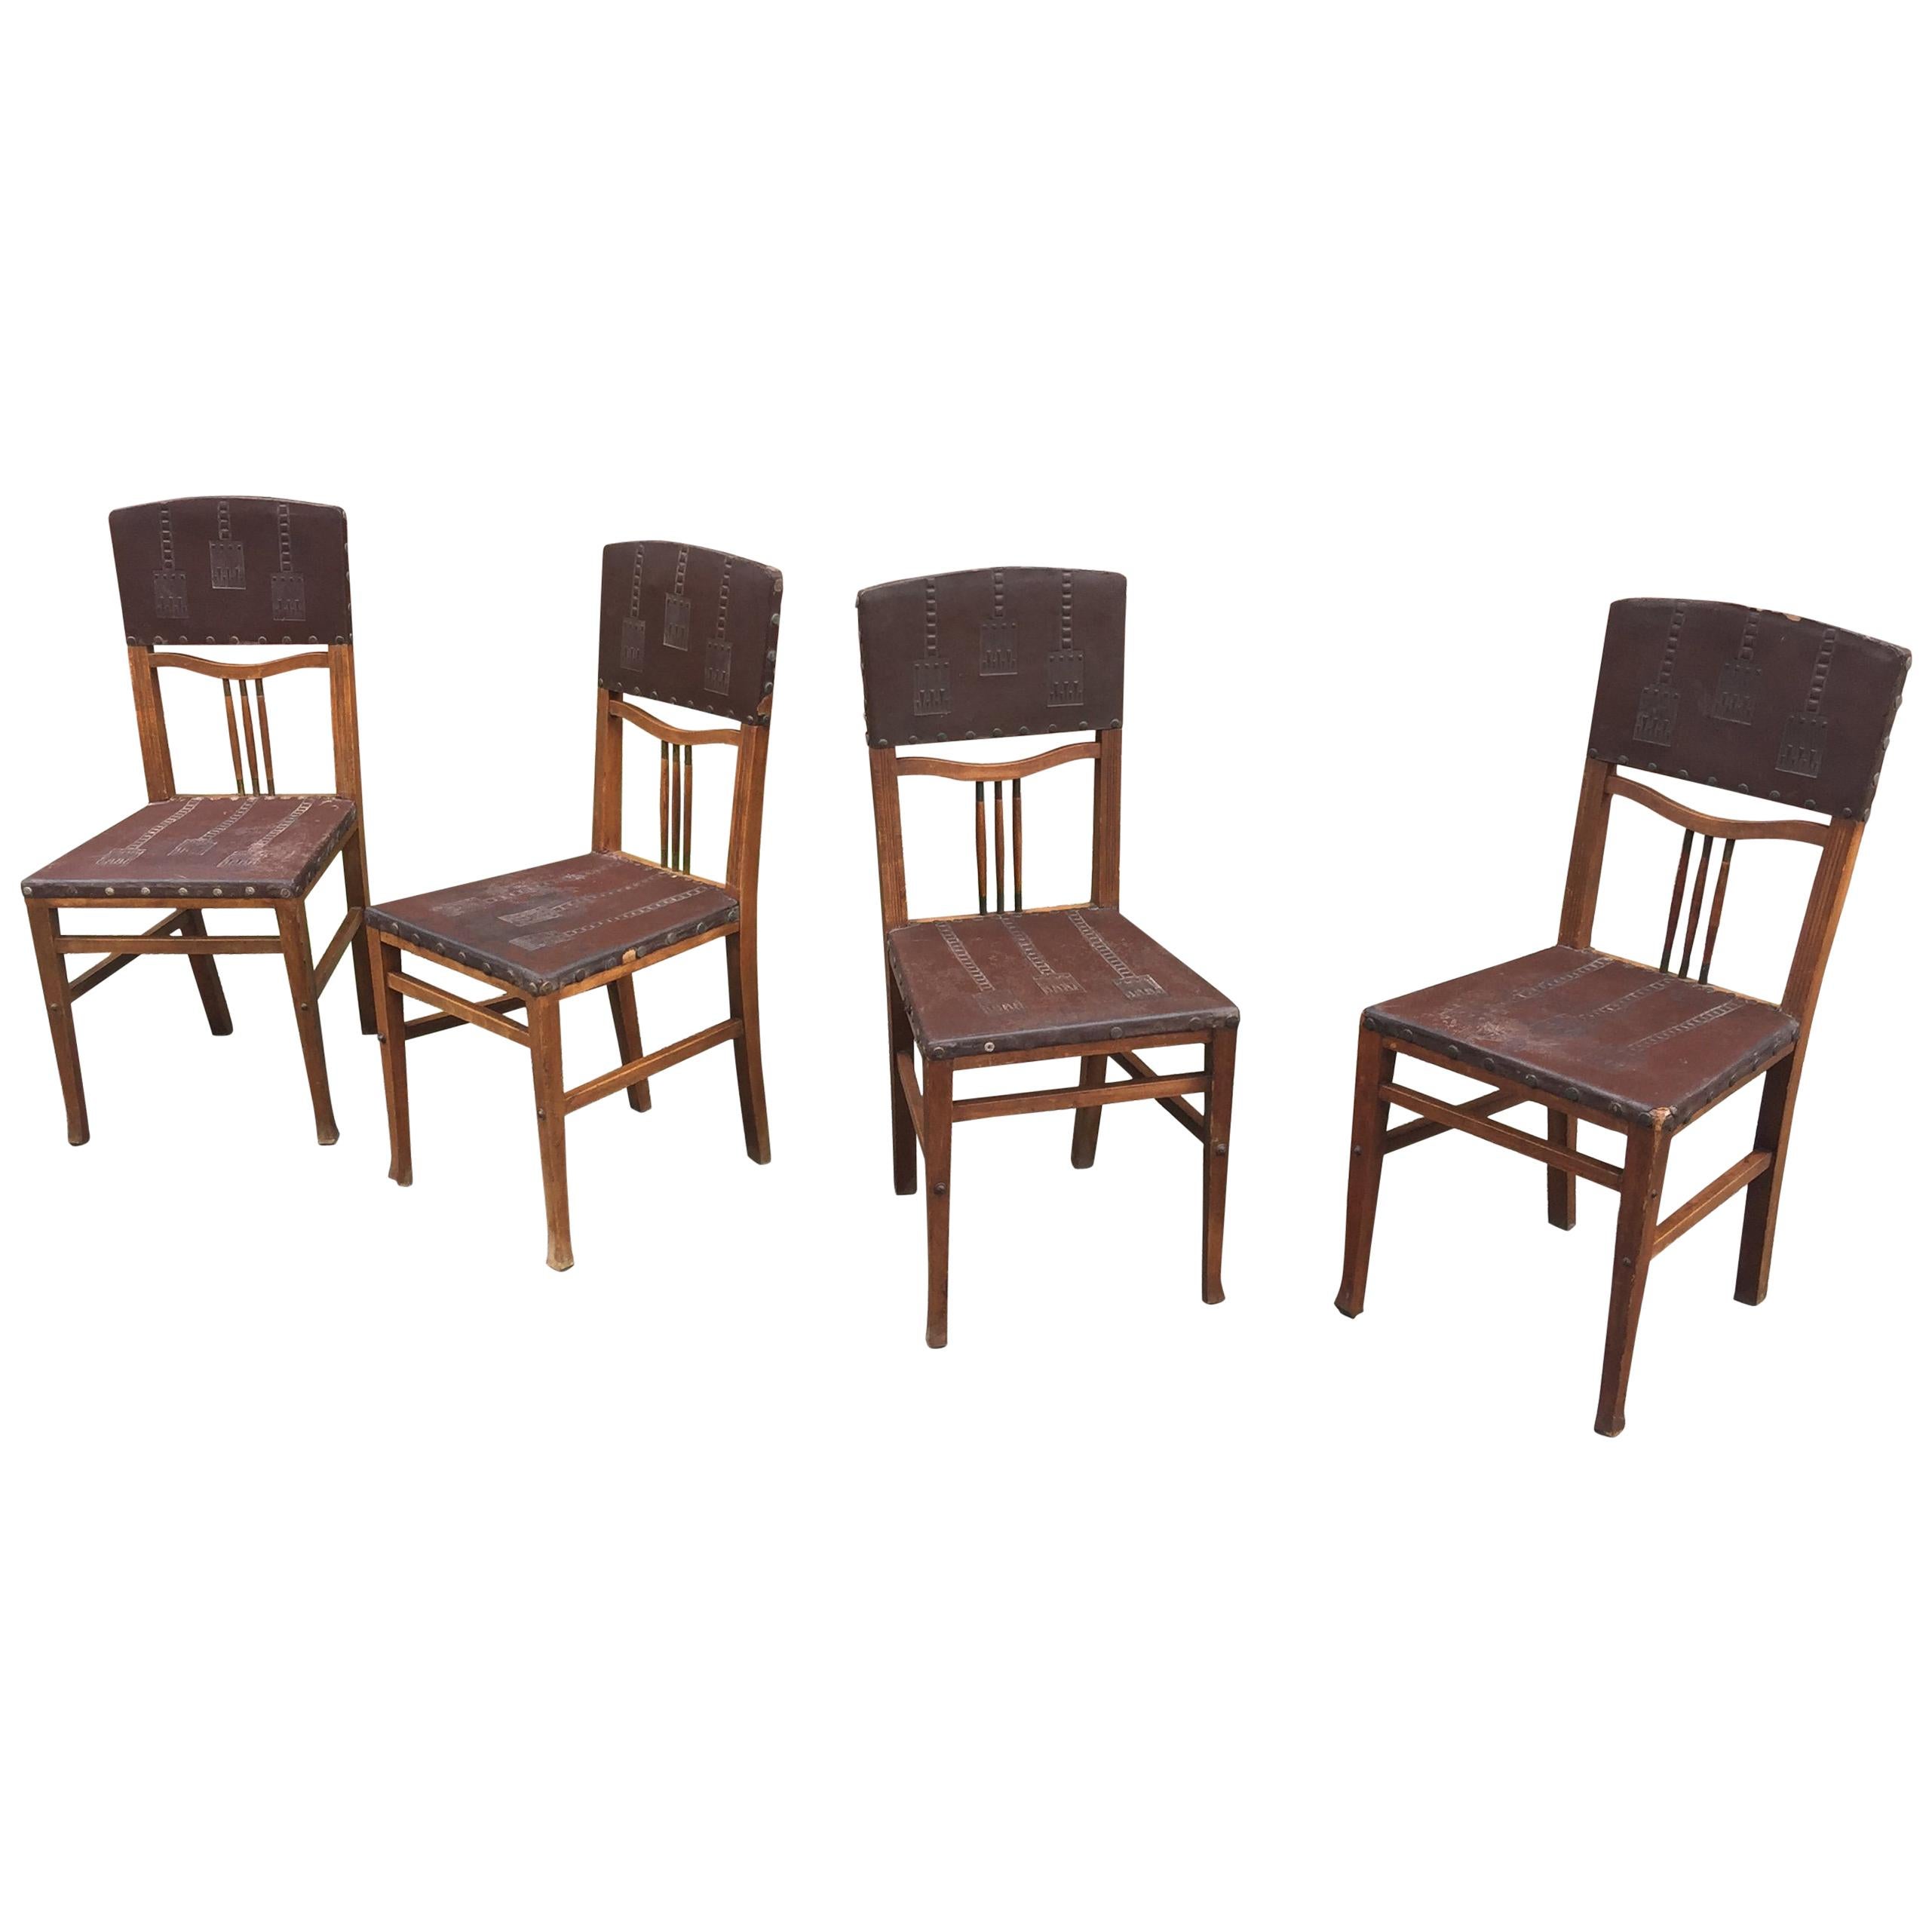 4 Chairs Art Nouveau Period Secession Wien Style, circa 1900